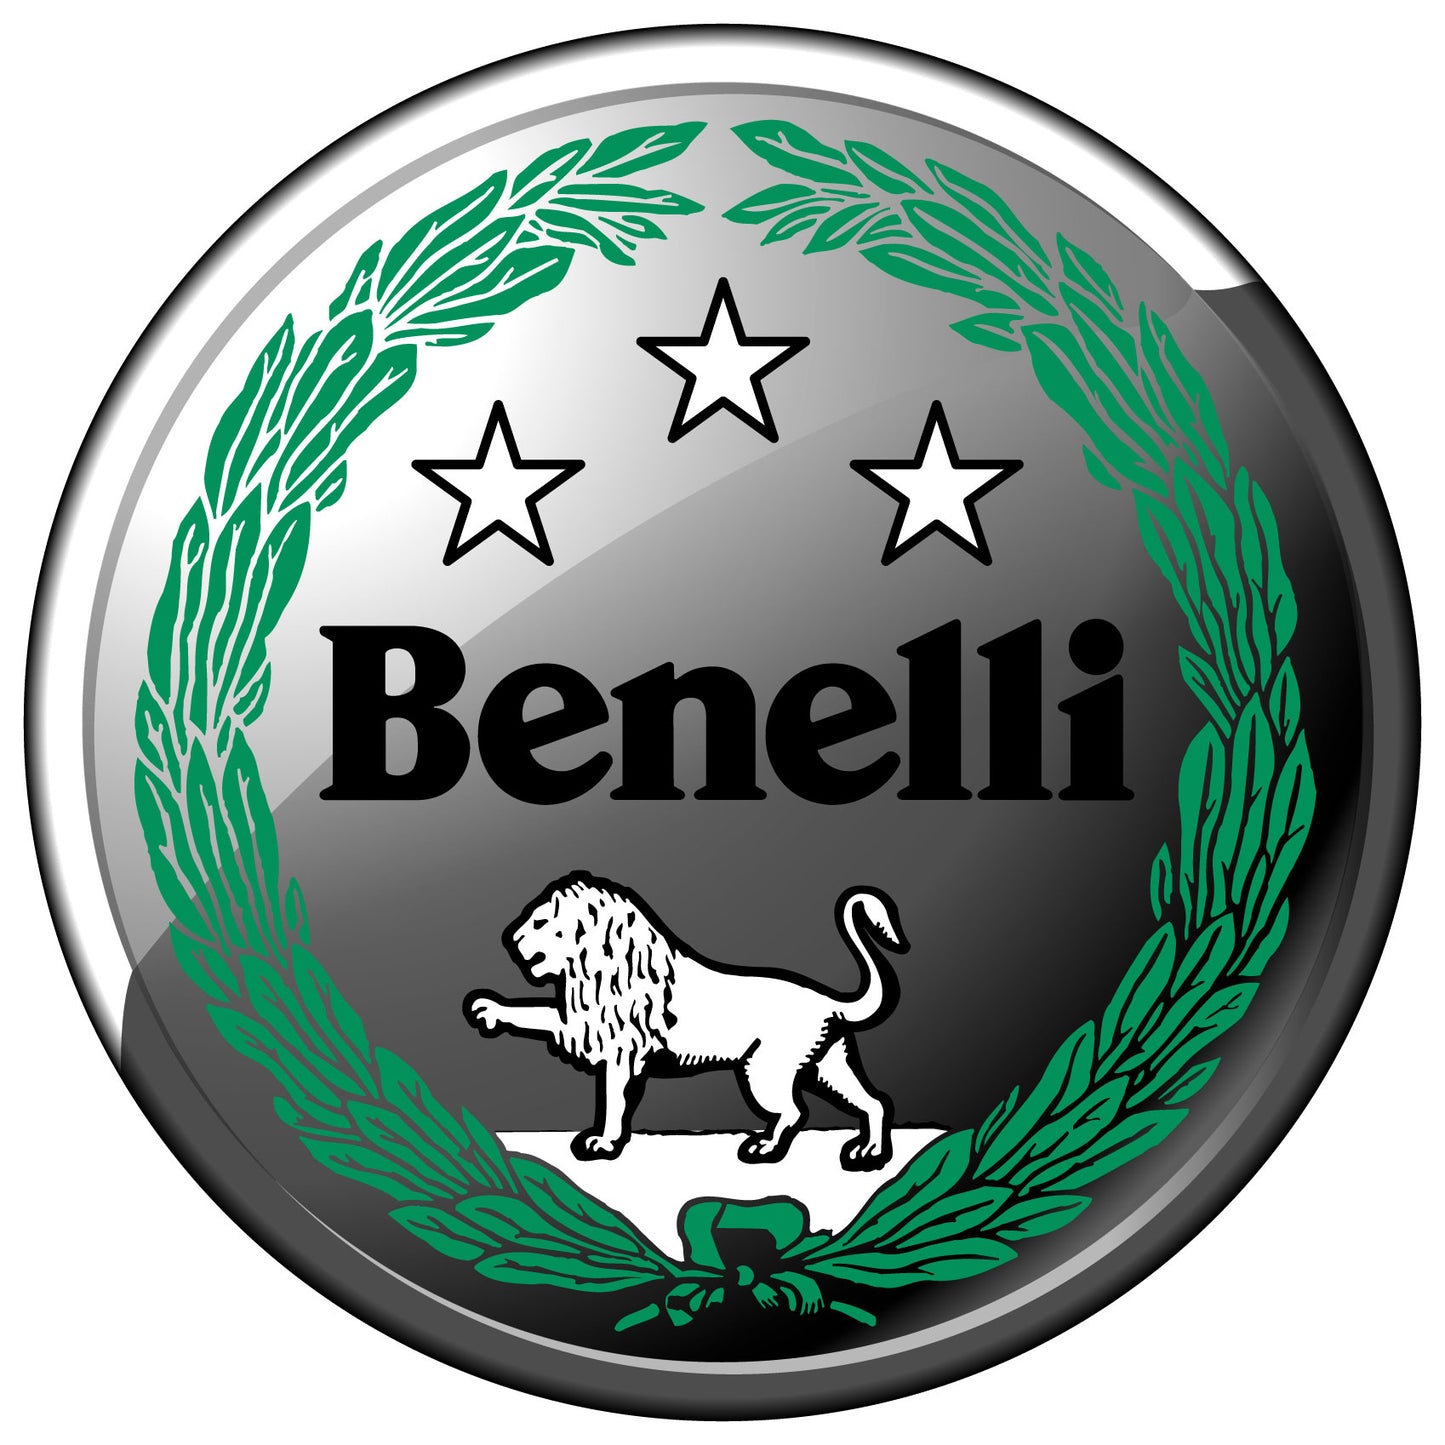 Benelli OEM Oil Filter TNT135 2020+ 169124320000